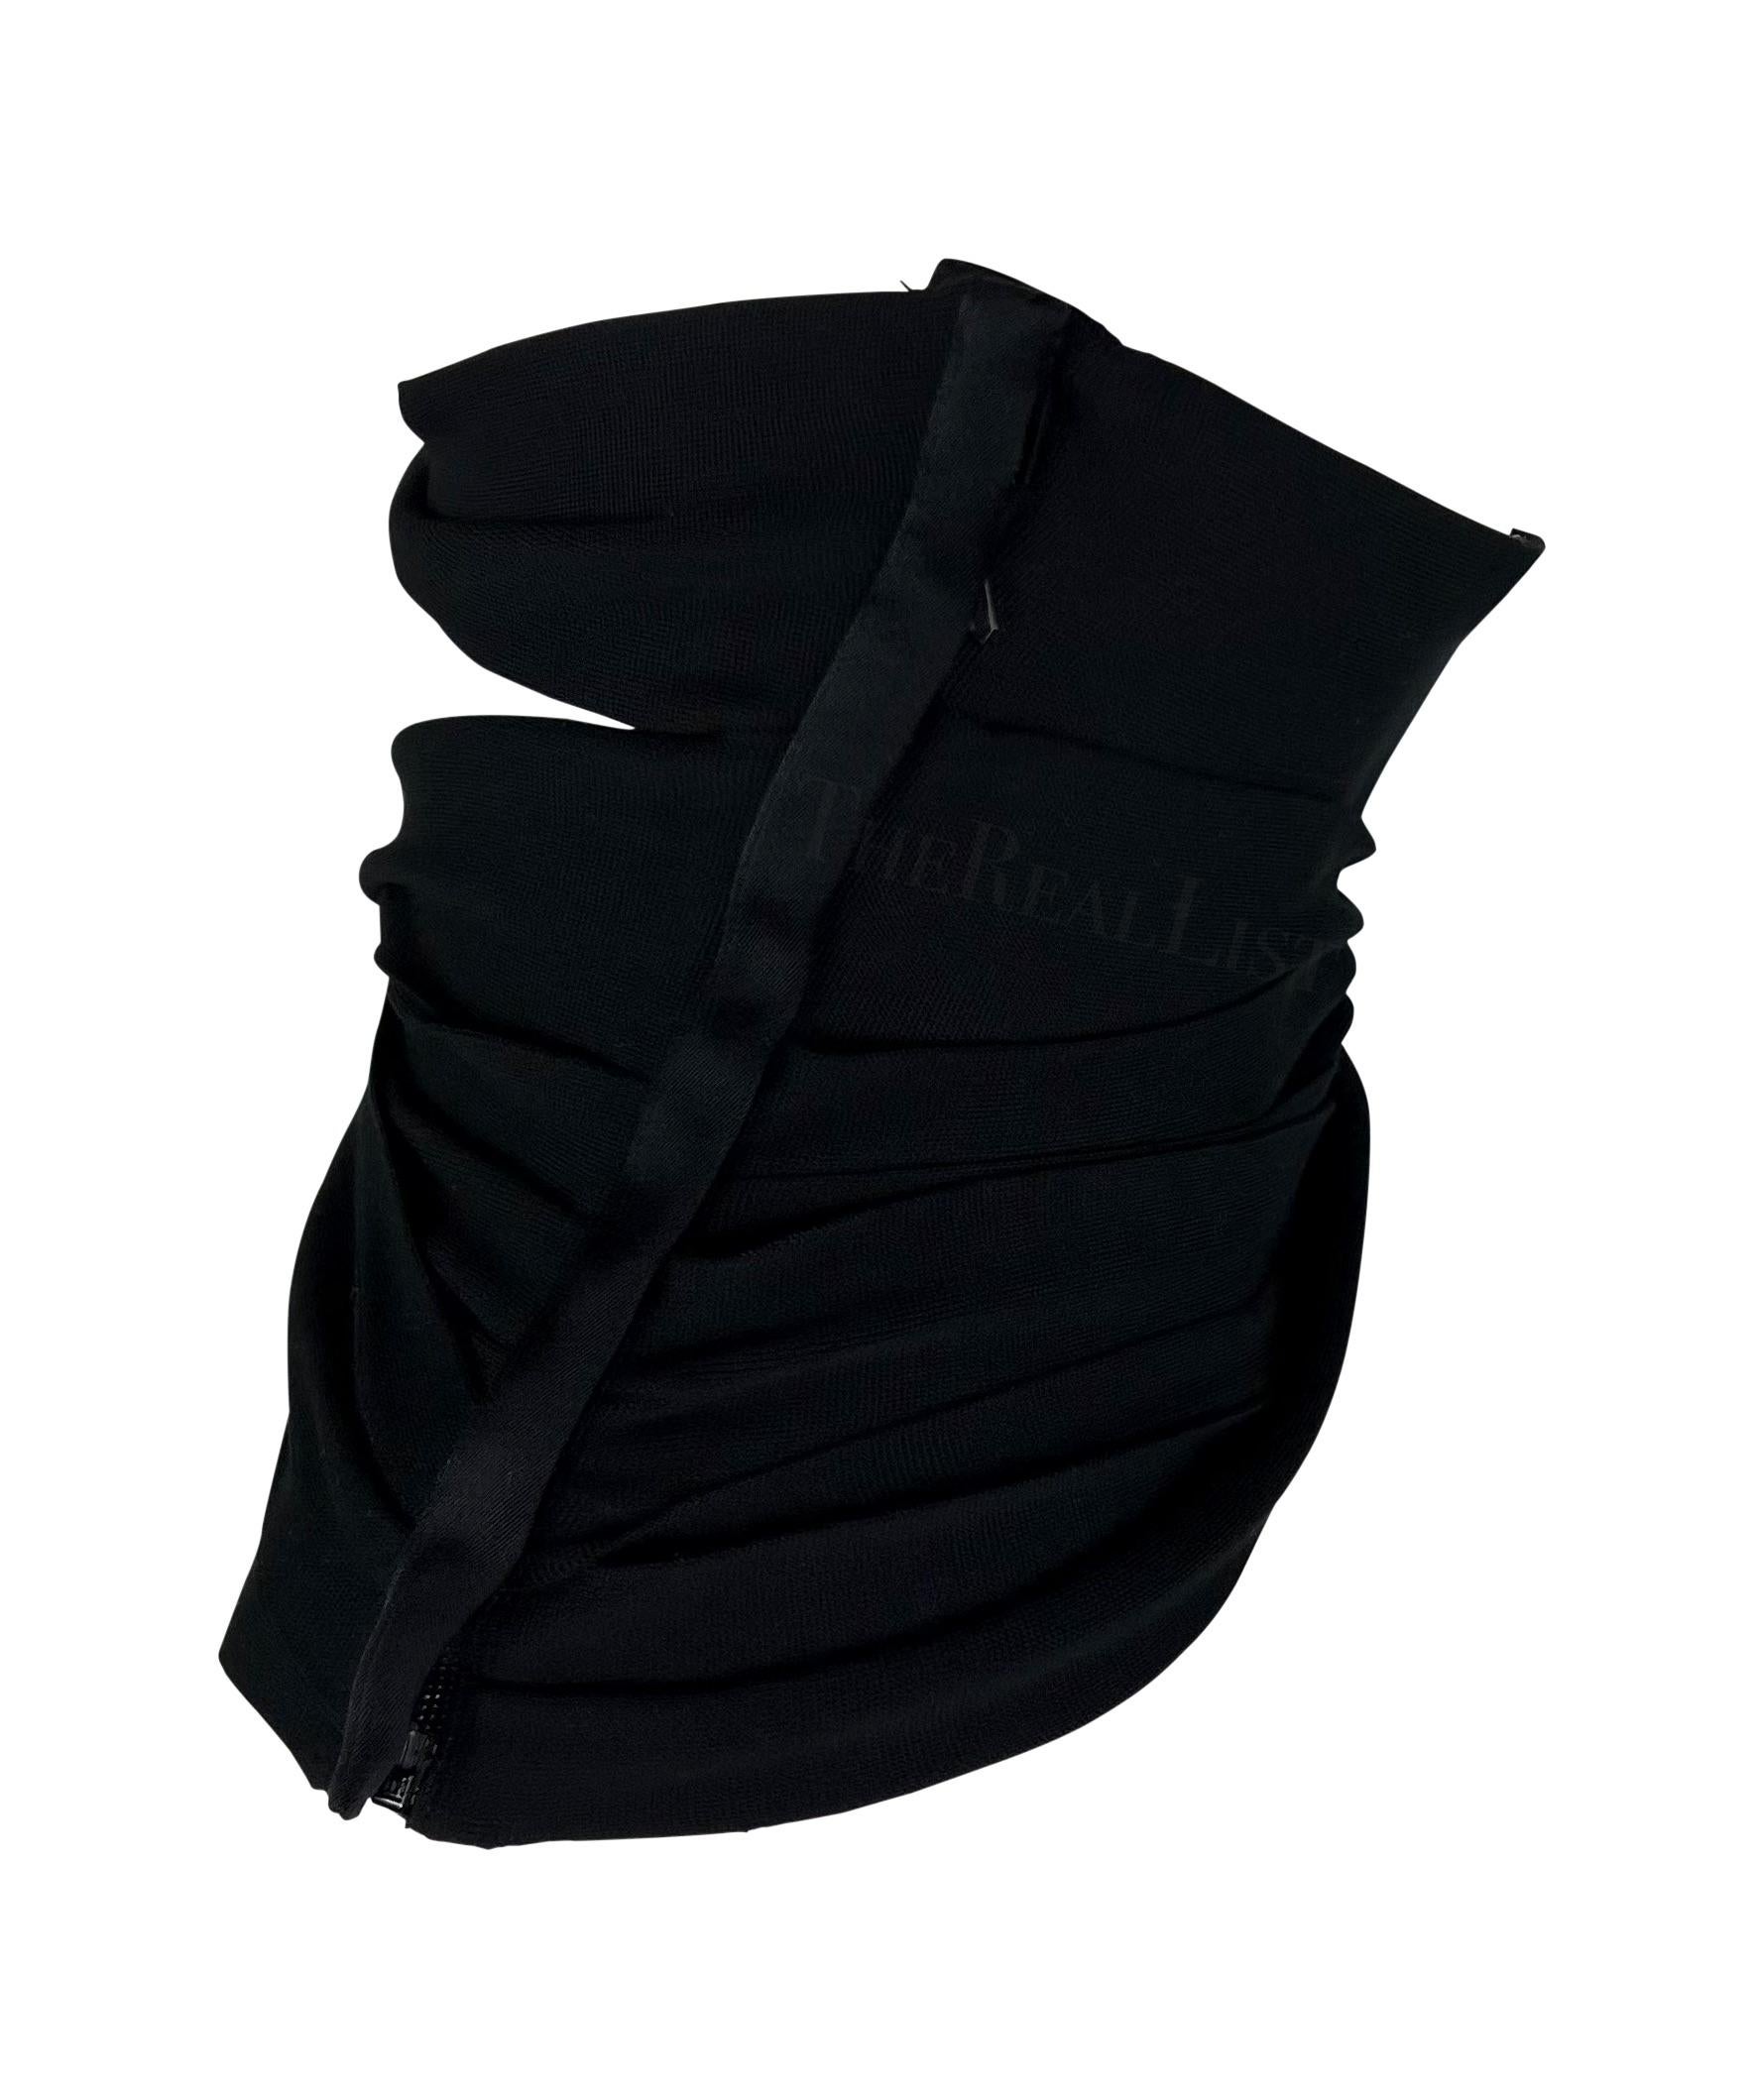 S/S 2001 Yves Saint Laurent by Tom Ford Black Bandage Corset Waist Belt Top For Sale 6